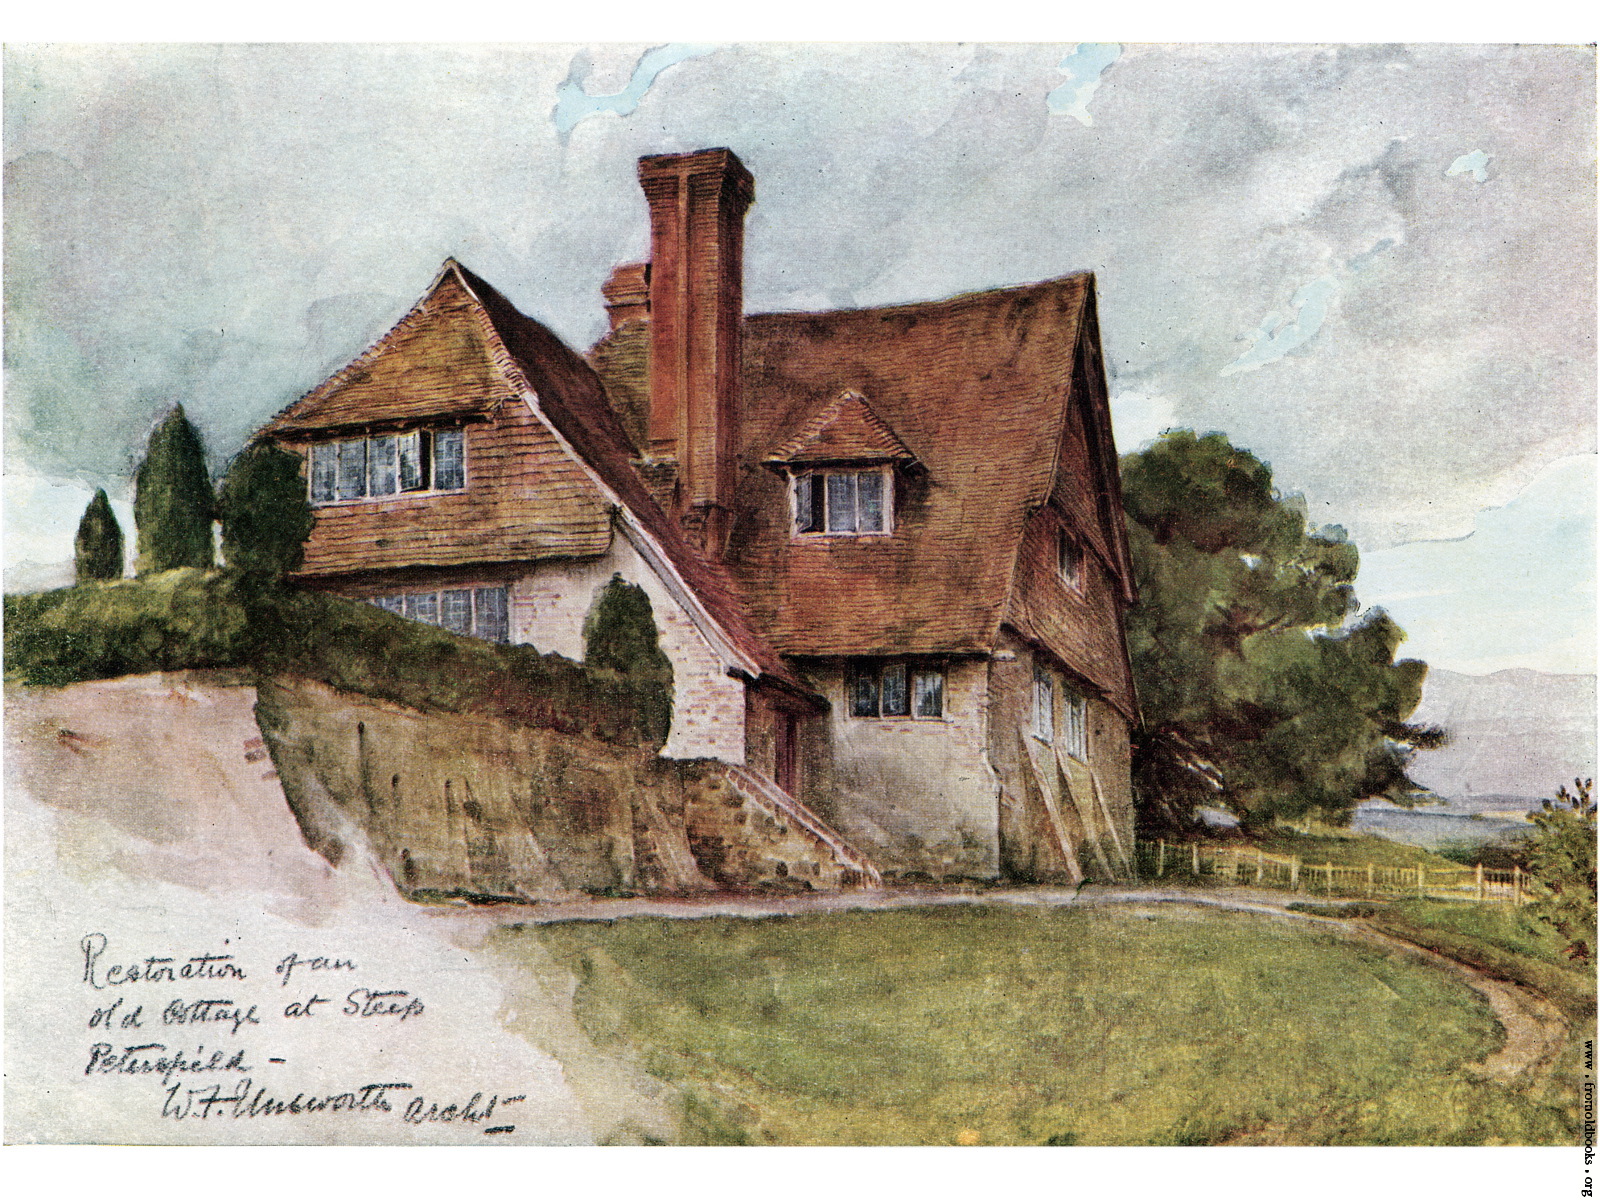 Restoration of Old Cottage at Steep Petersfield details